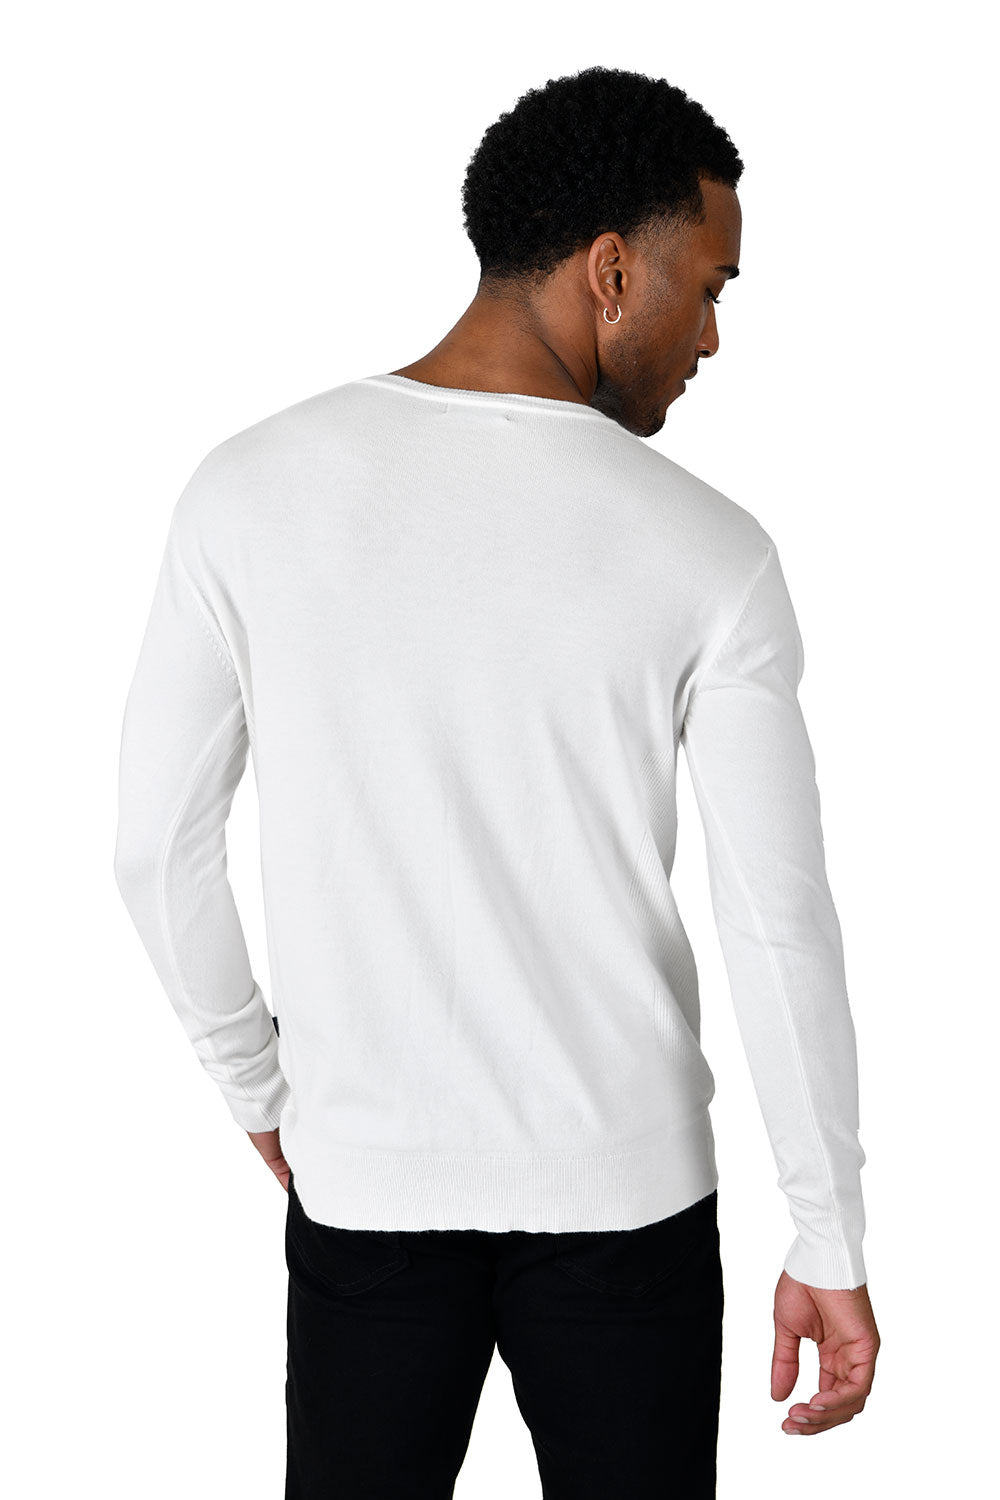 Barabas Men's Crew Neck Ribbed Solid Color Basic Sweater LS2101